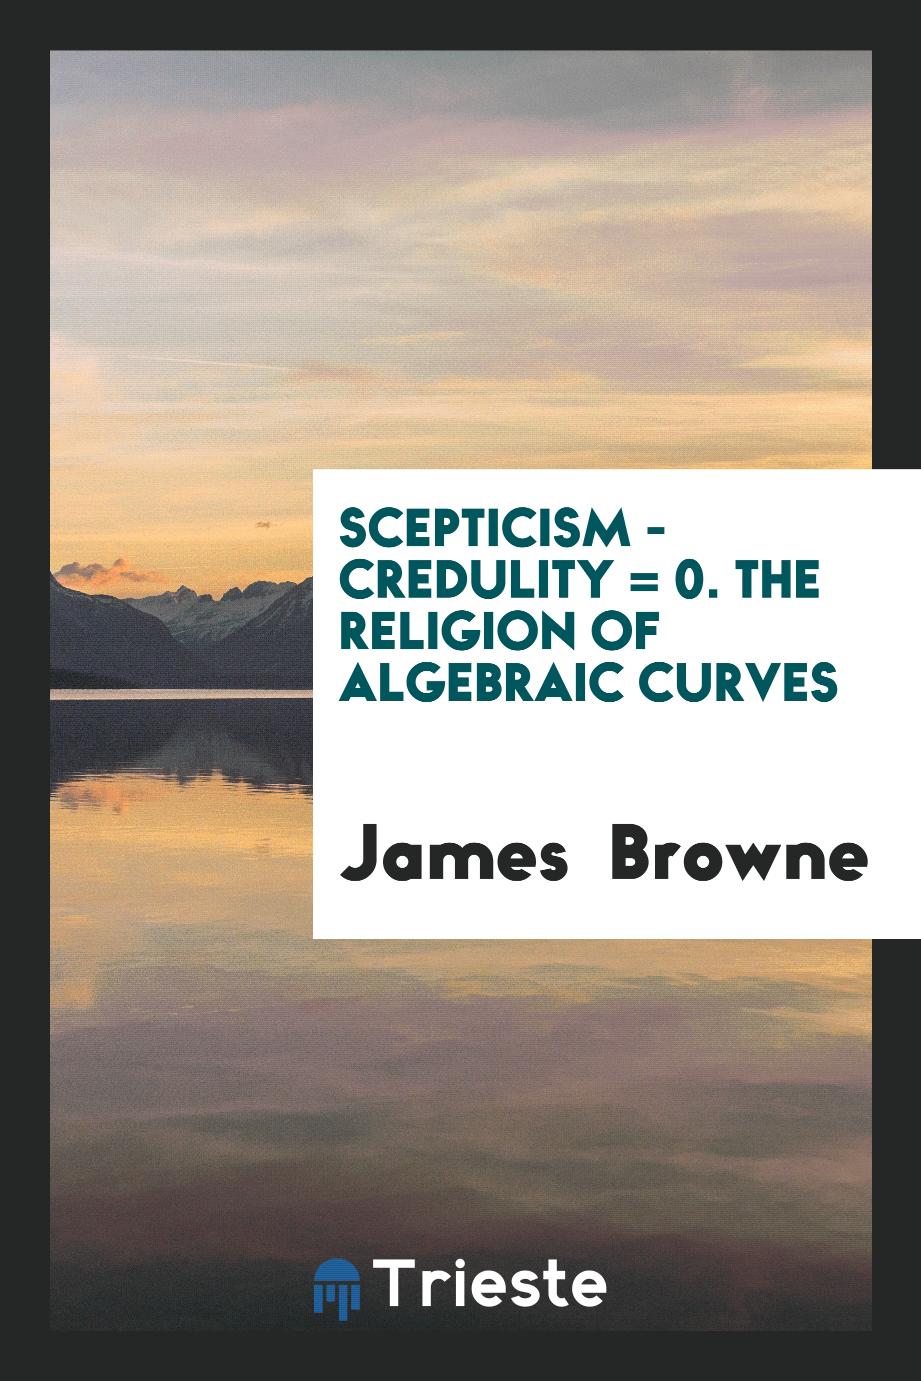 Scepticism - credulity = 0. The religion of algebraic curves